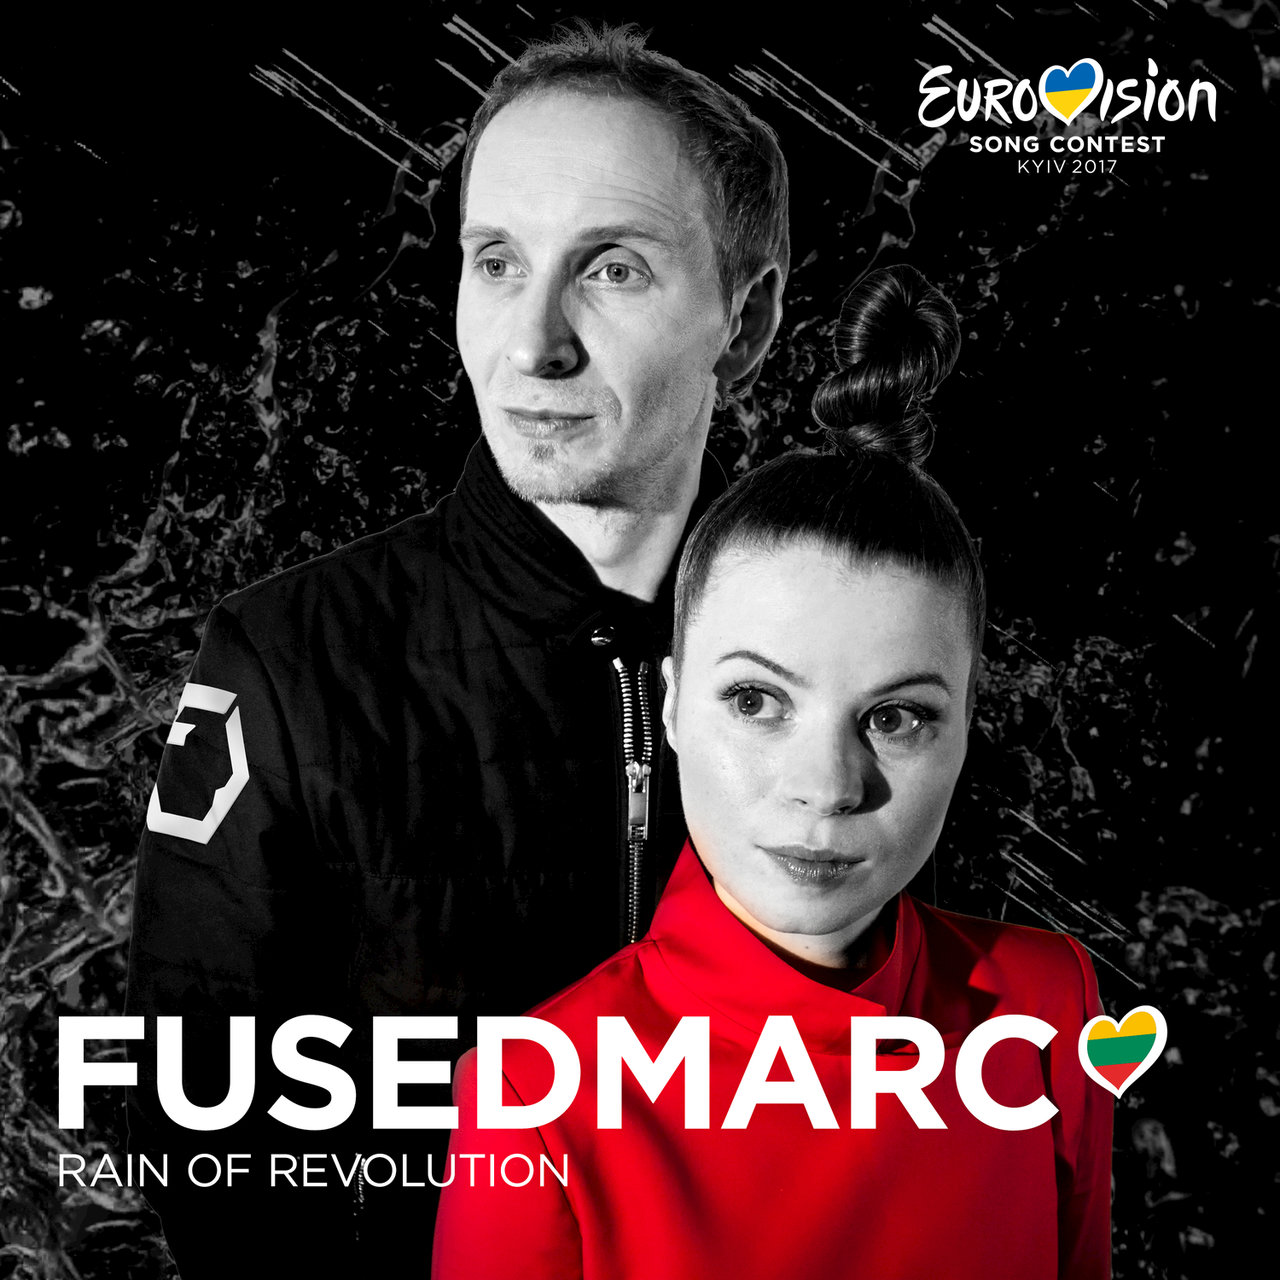 Fusedmarc Rain of Revolution cover artwork